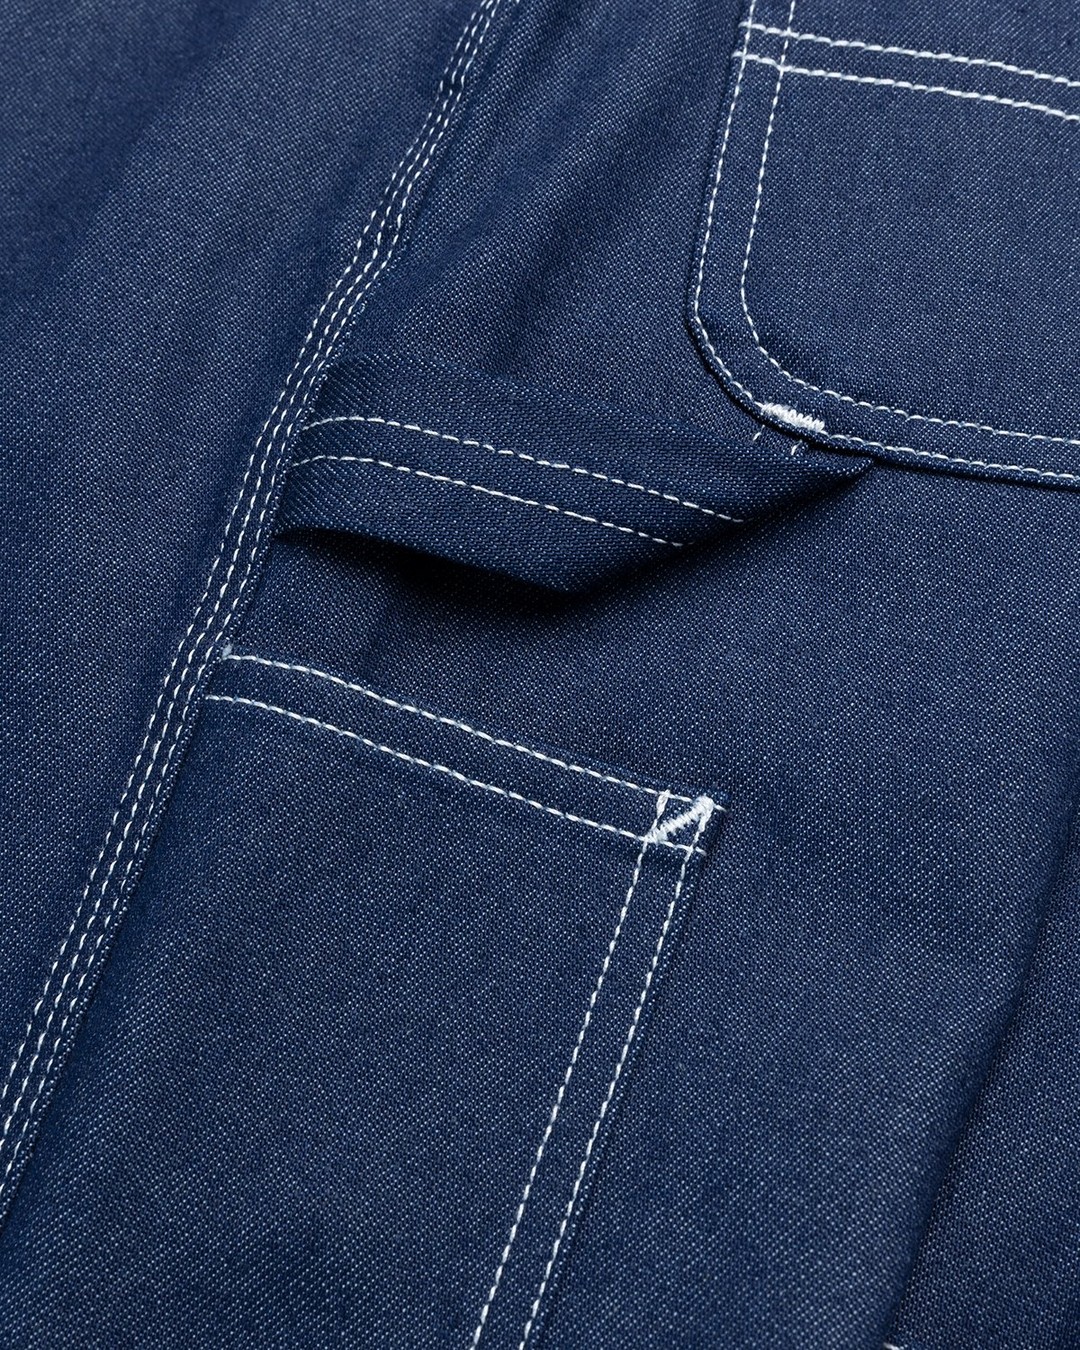 Carhartt WIP – Ruck Single Knee Pant Blue Rigid - Pants - Blue - Image 4